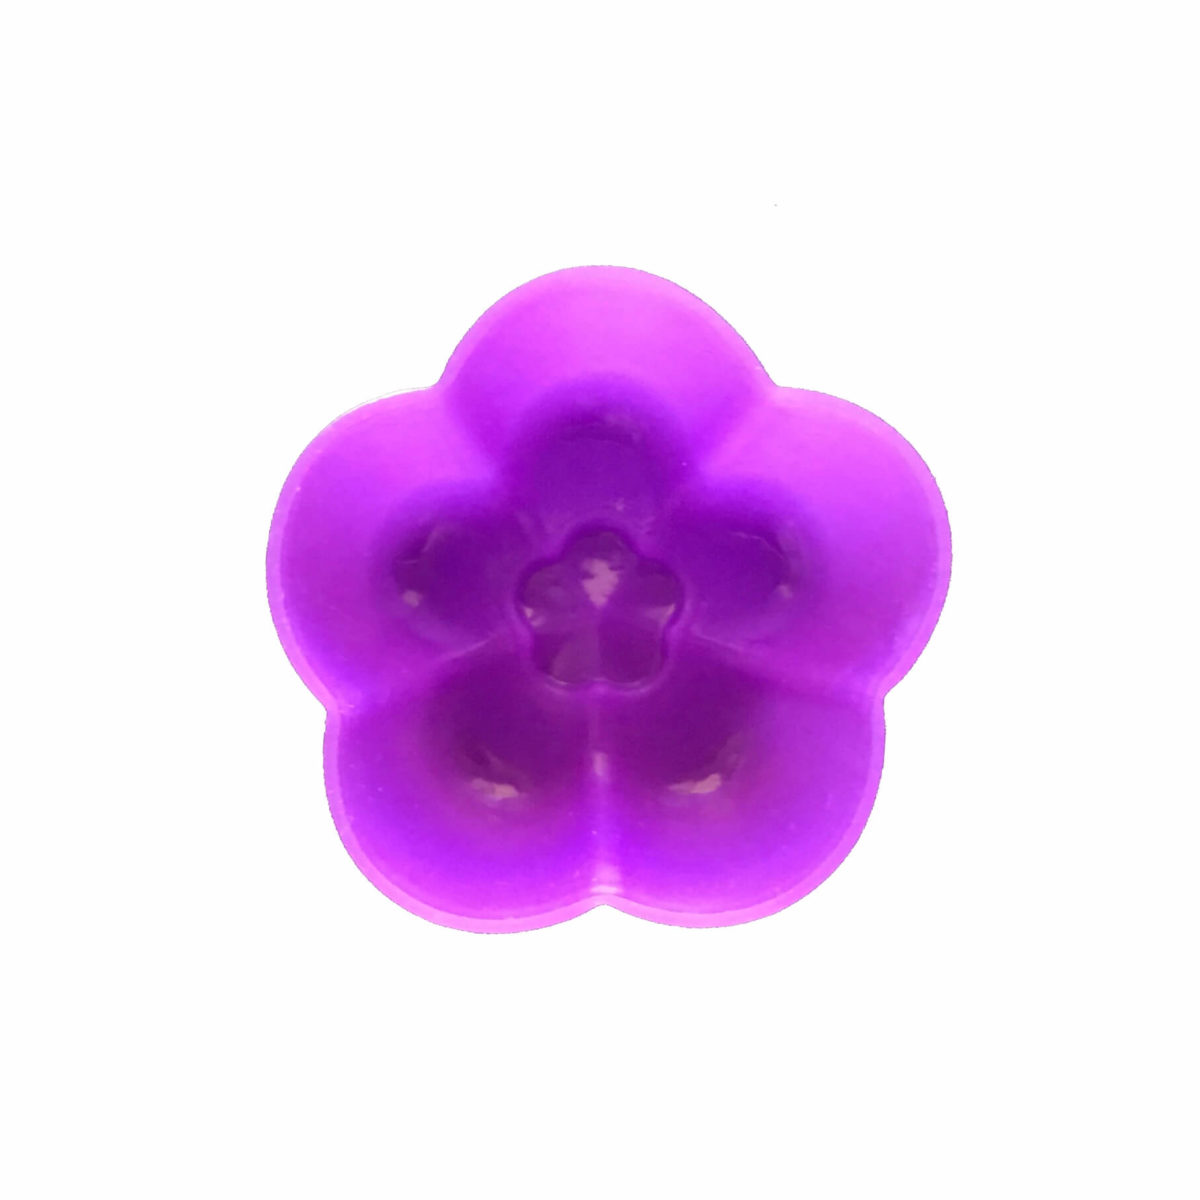 back of 5cm purple plum blossom single cavity silicone mould